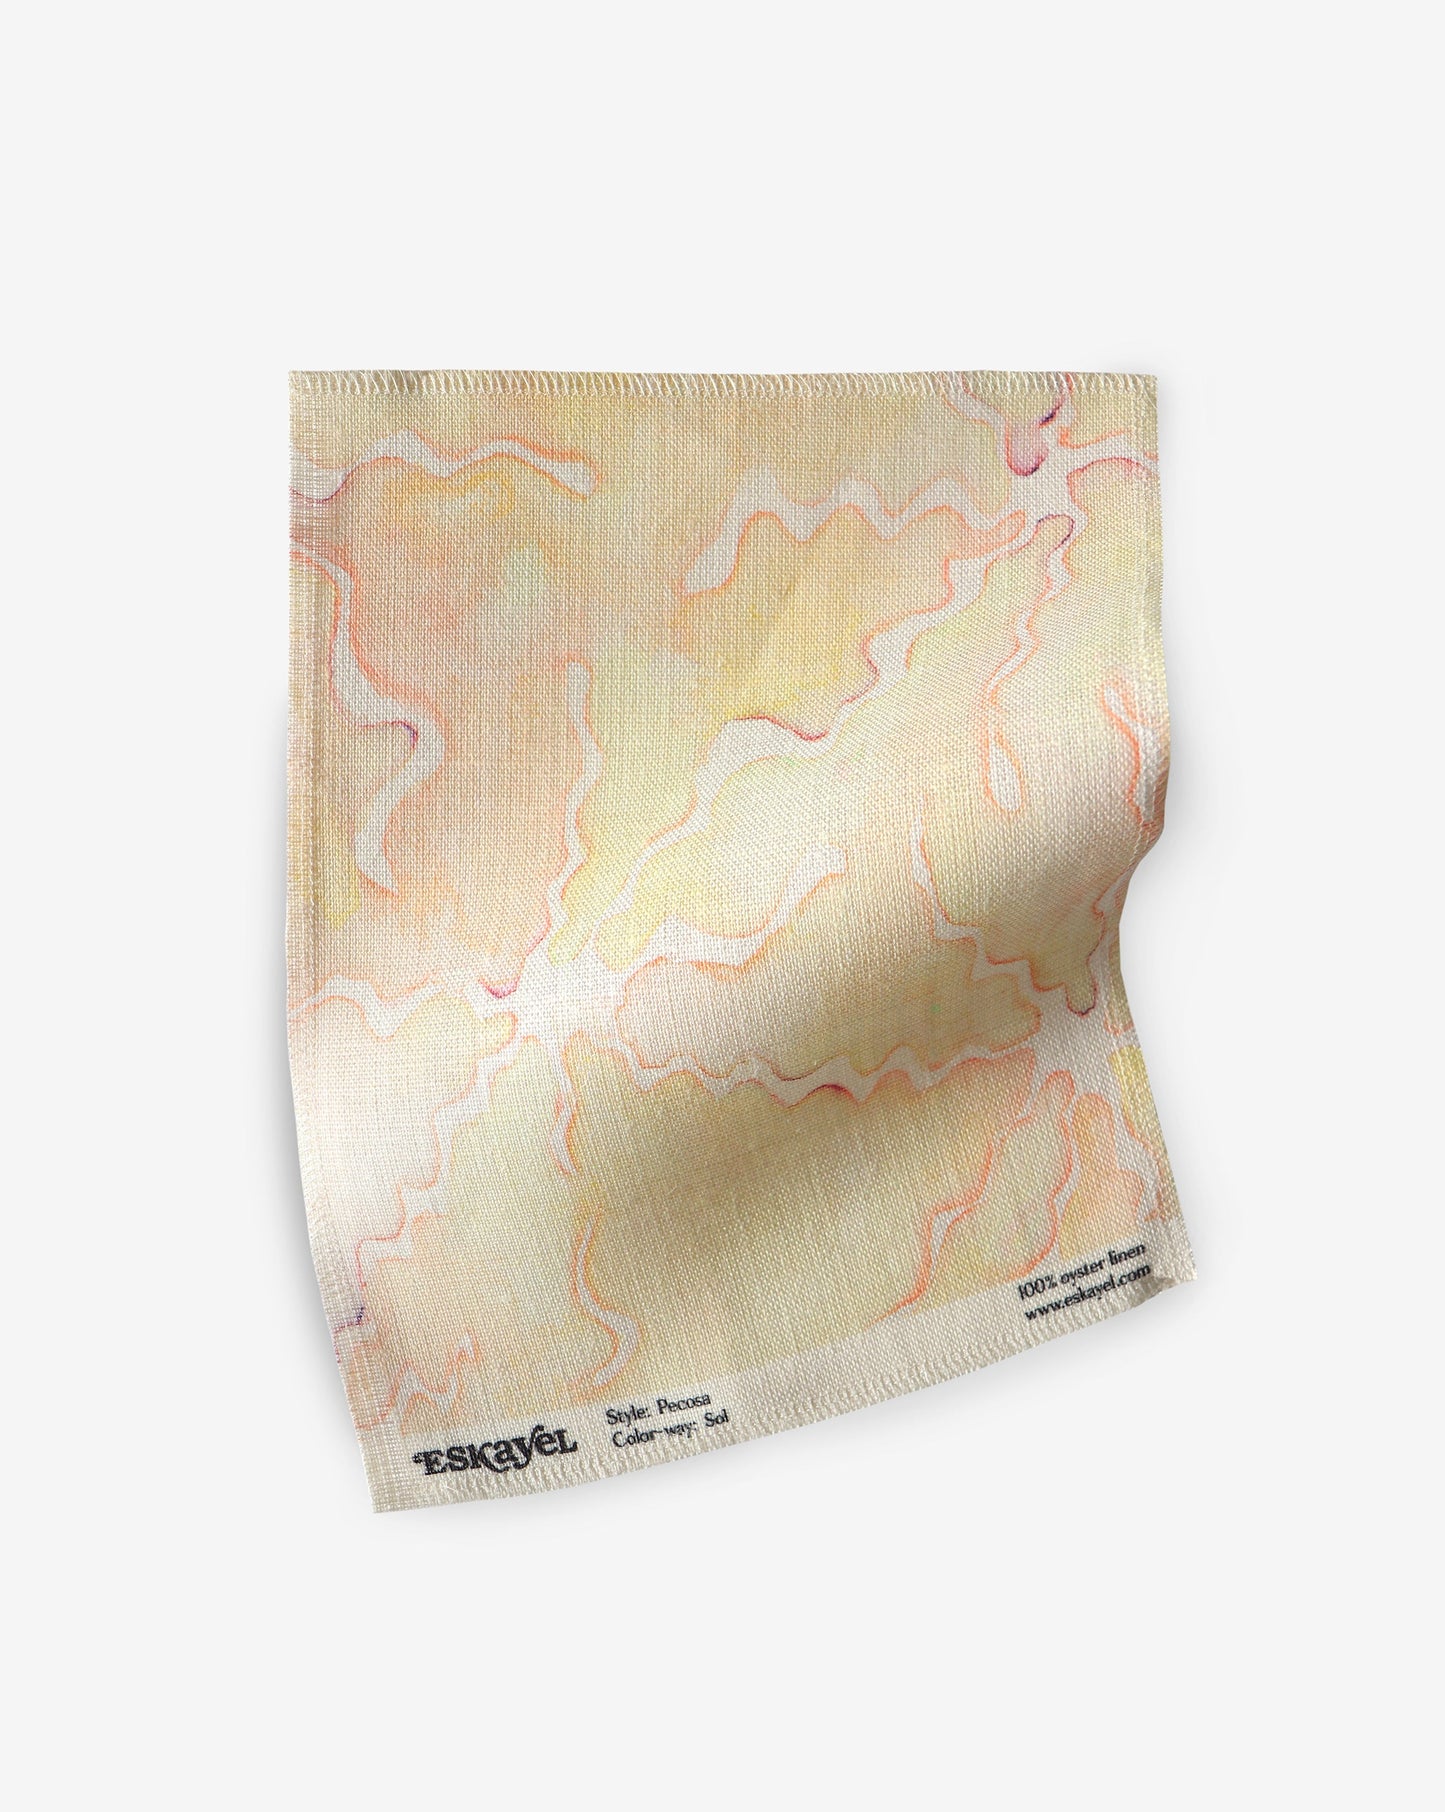 Pecosa Fabric Sample||Sol